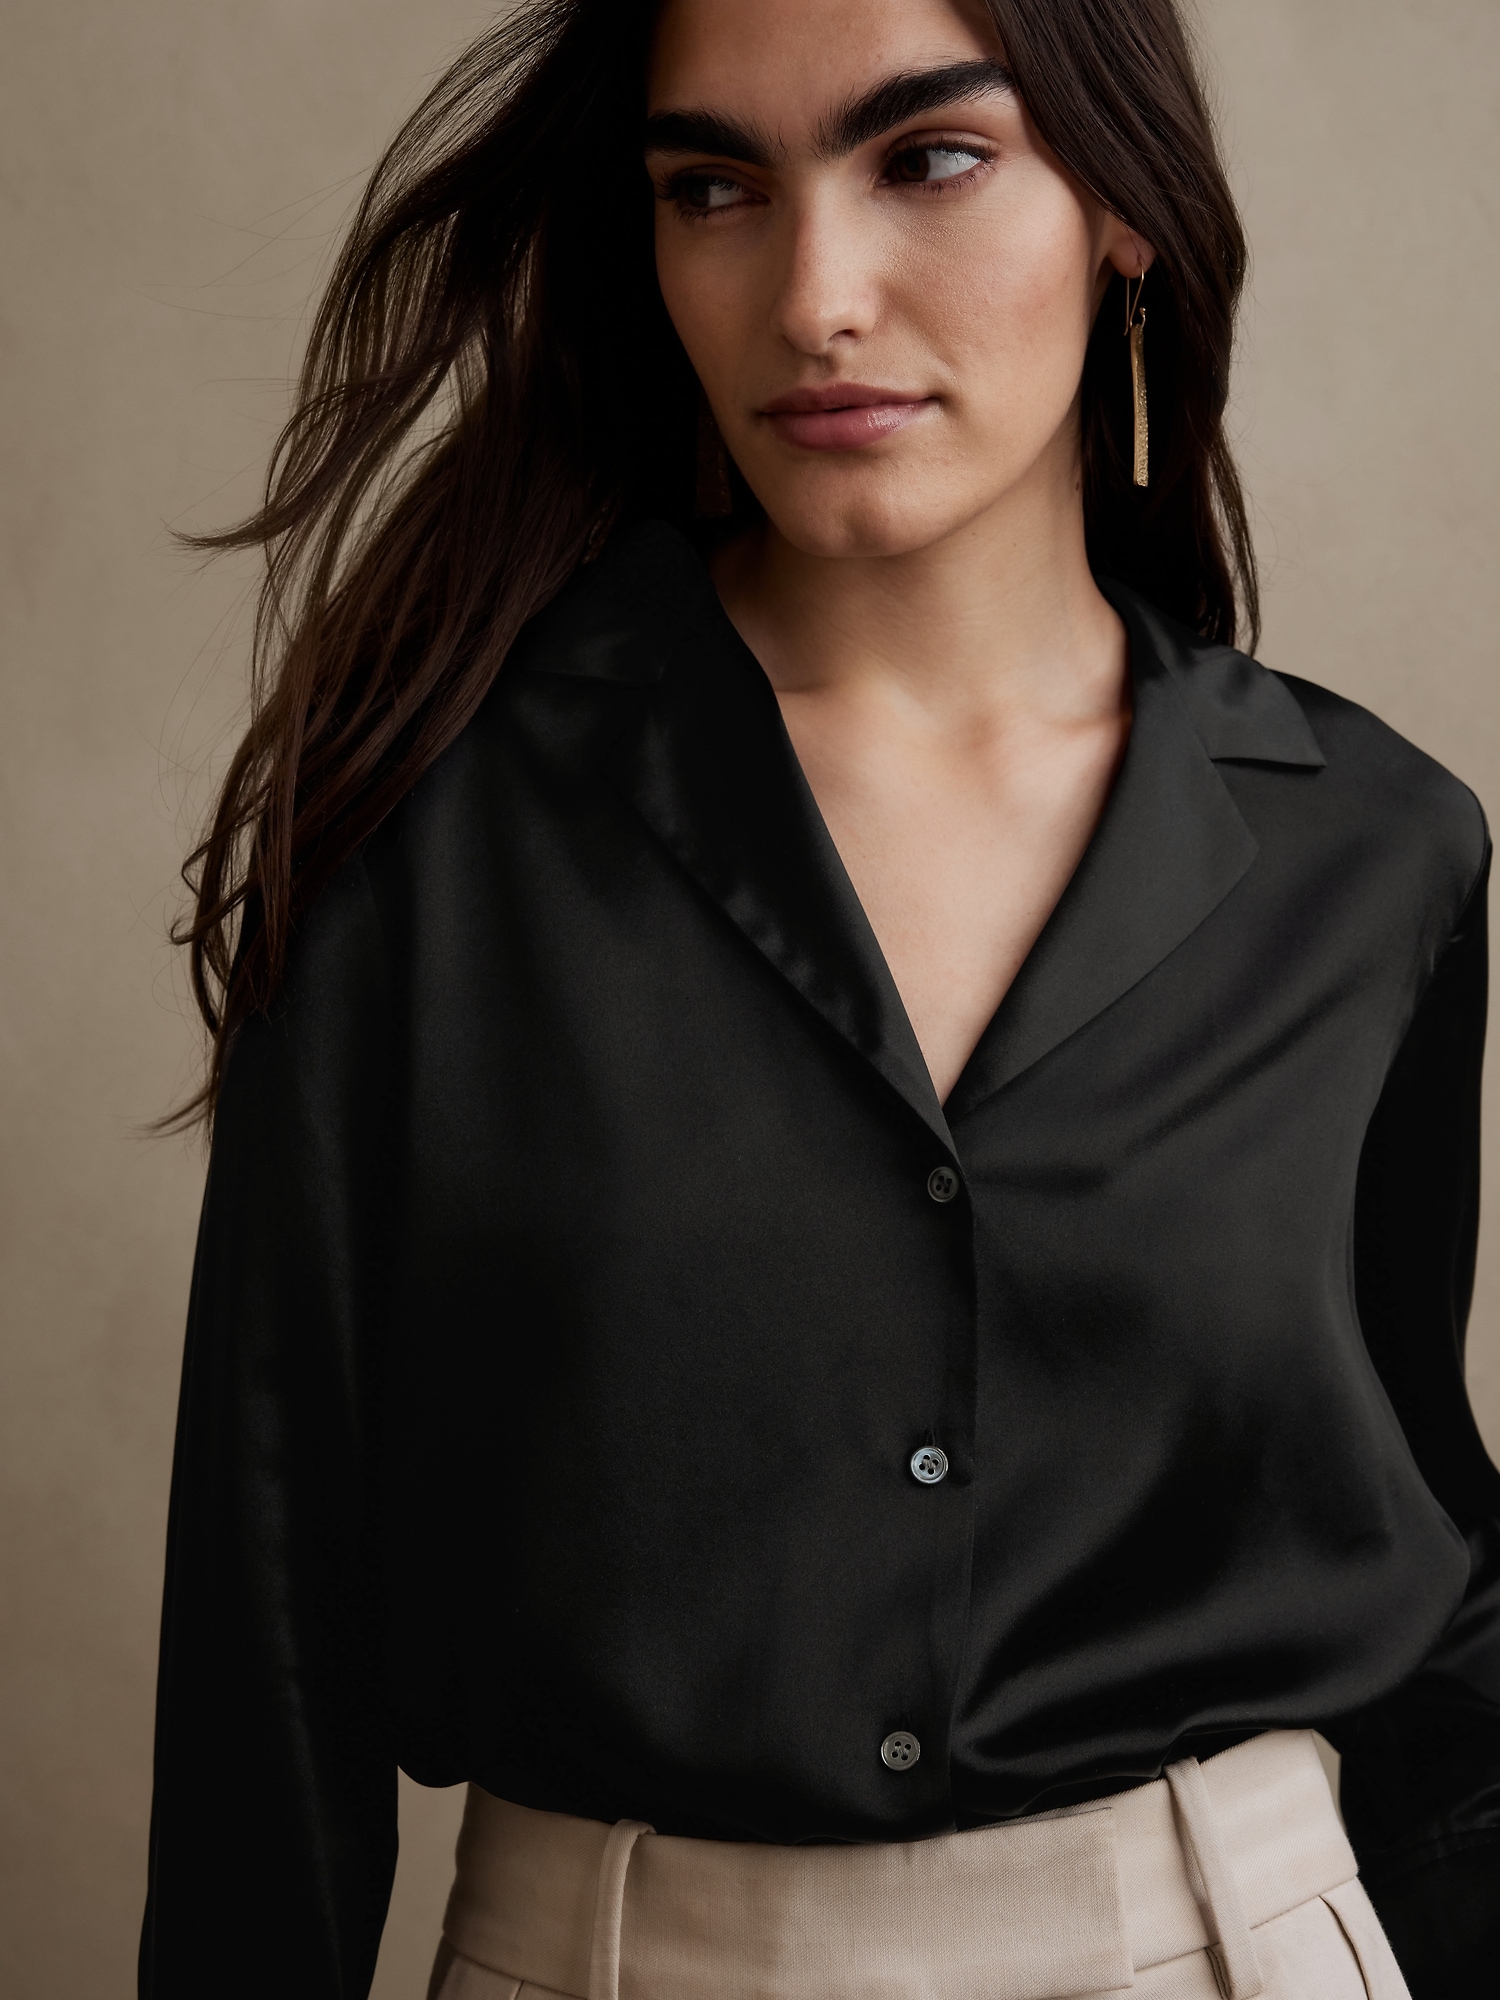 Women's Blouses - Button Down Tops & Silk Shirts